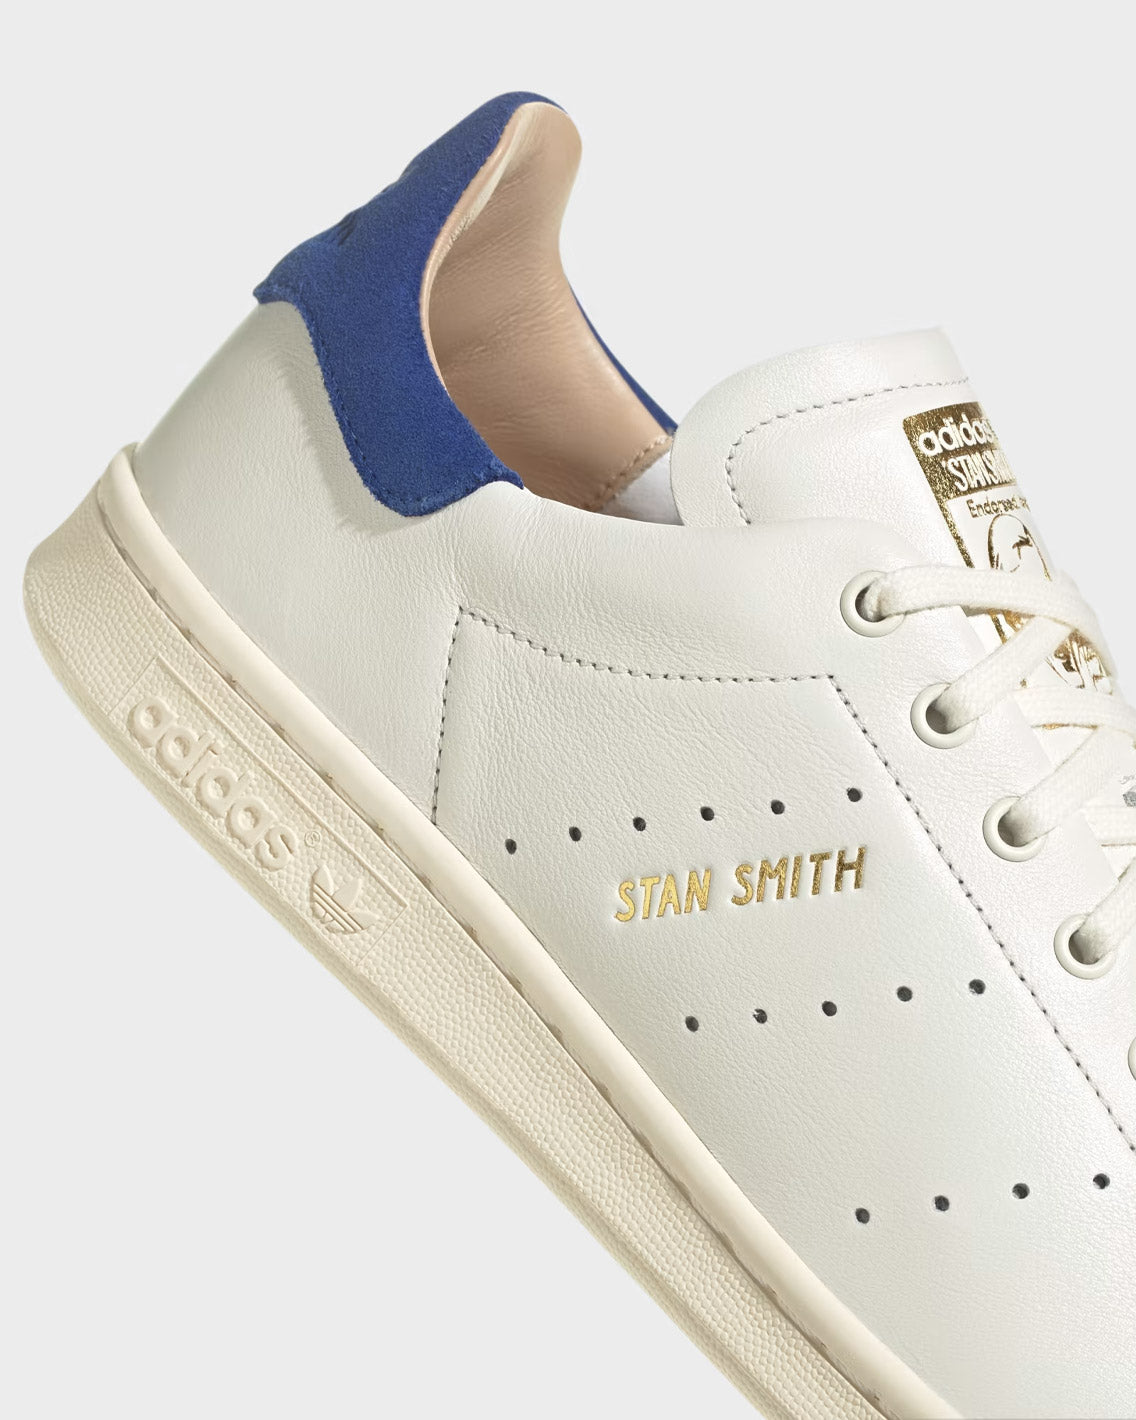 Adidas Originals - Stan Smith Lux - Off White / Cream / Blue